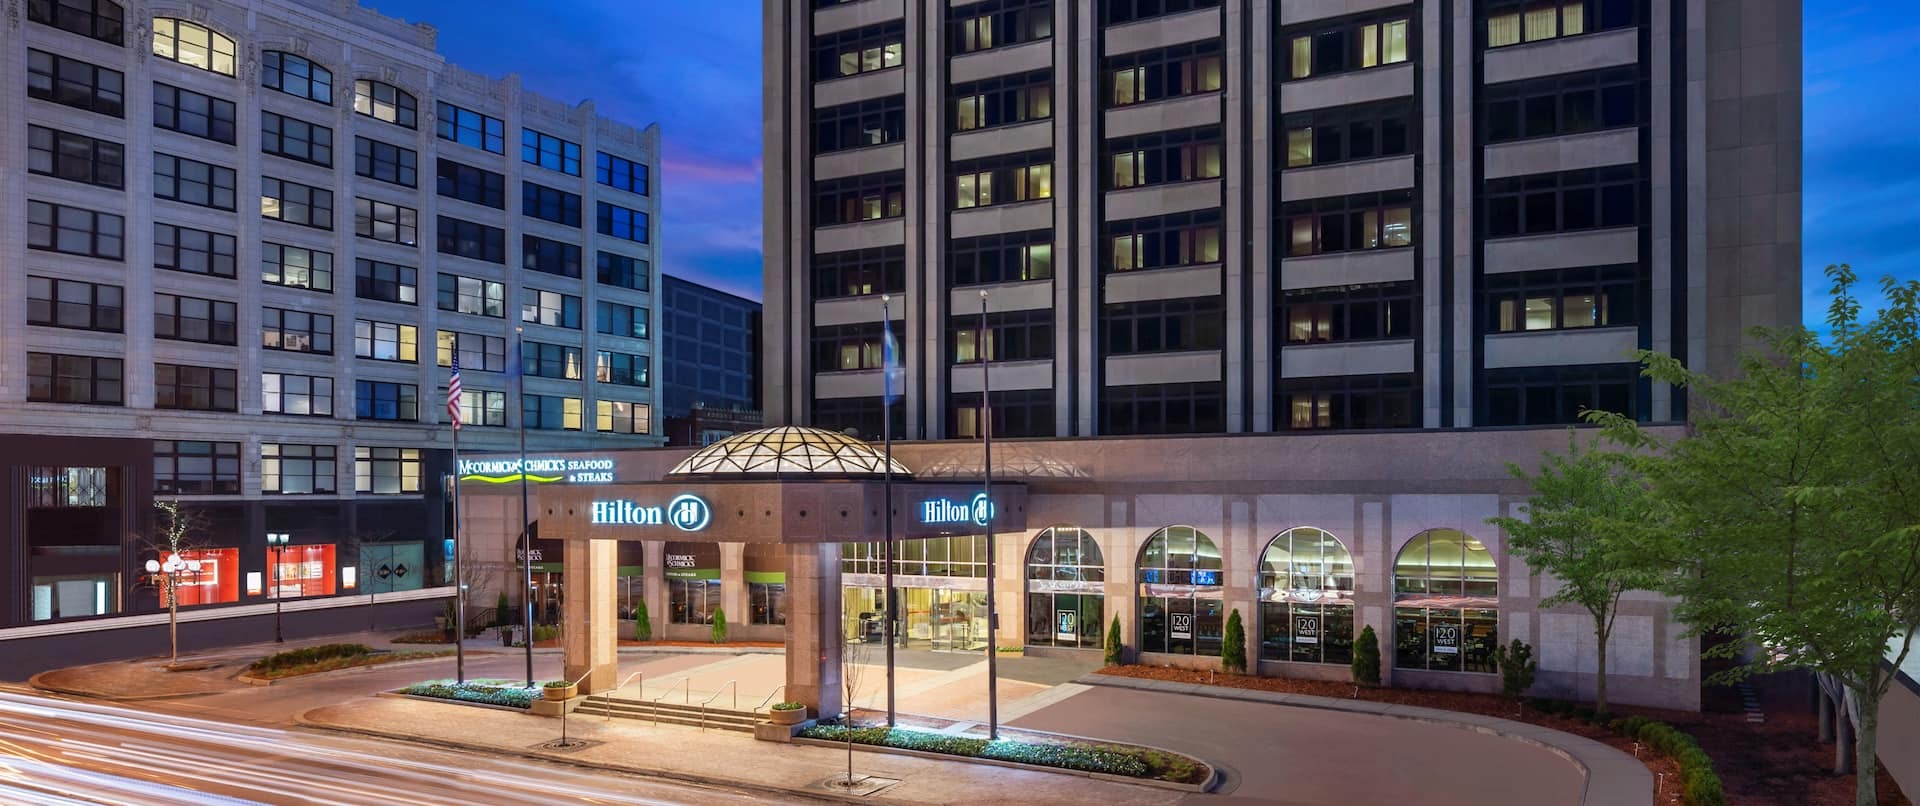 Photo of Hilton Indianapolis Hotel & Suites, Indianapolis, IN